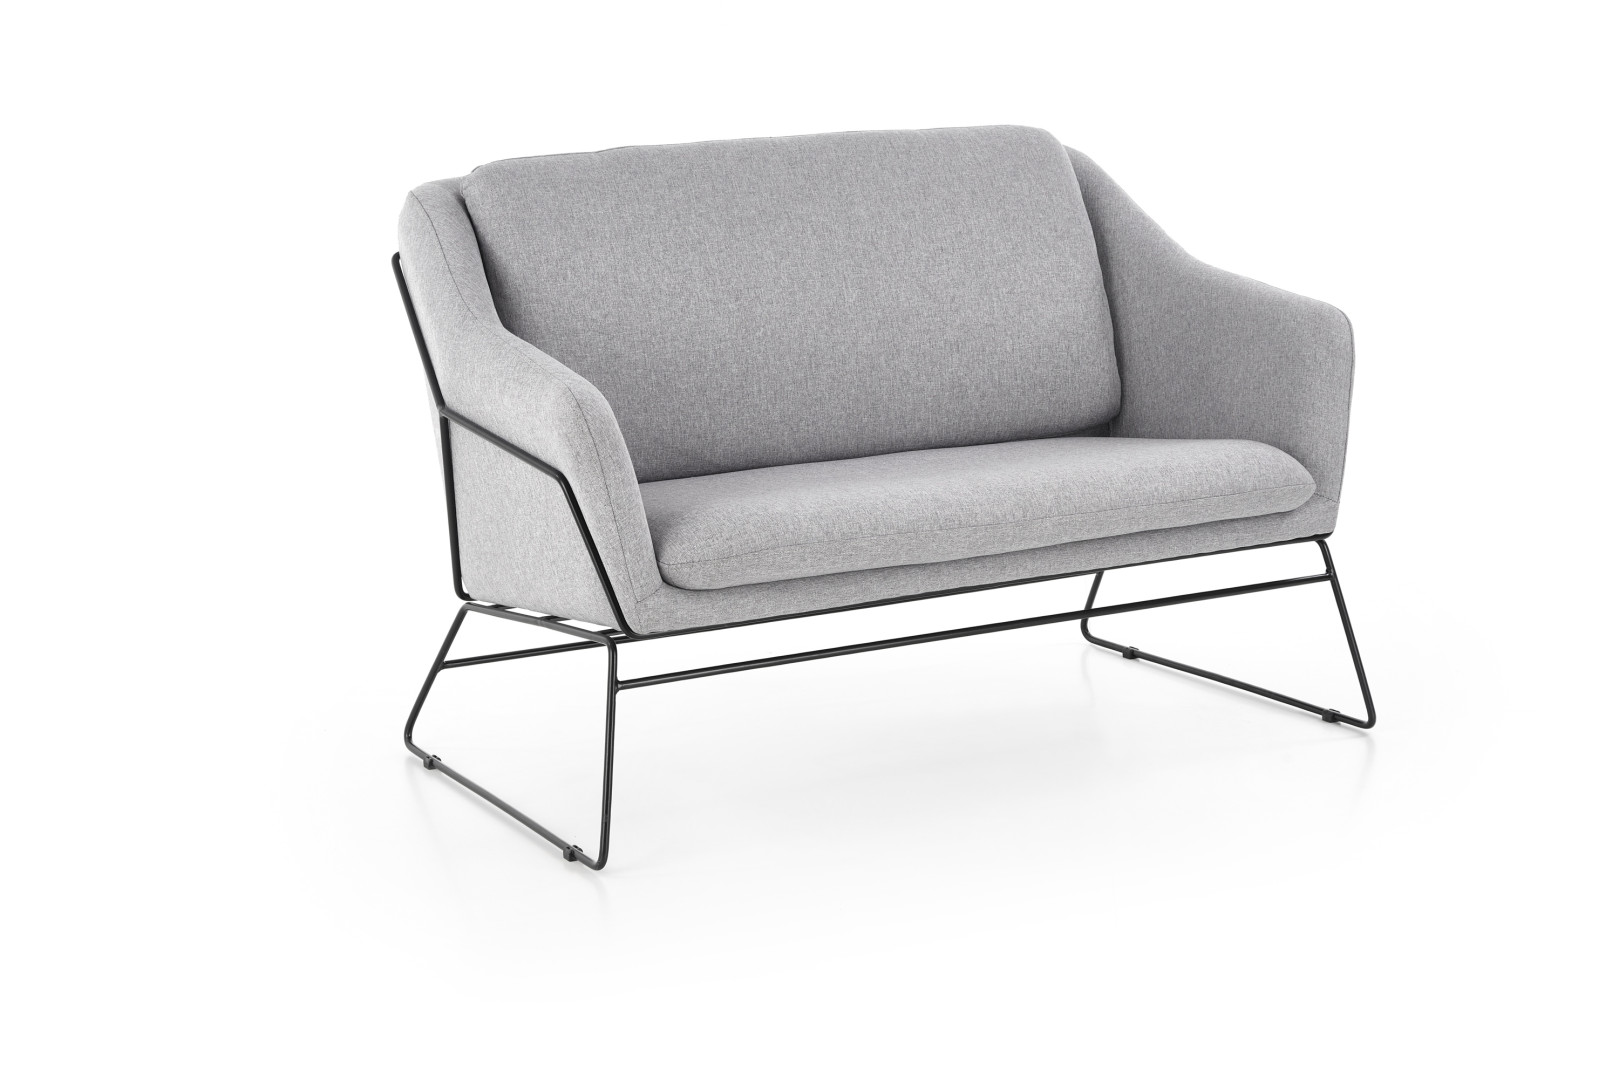 Produkt w kategorii: Fotele, nazwa produktu: Fotel Soft - komfort i styl!